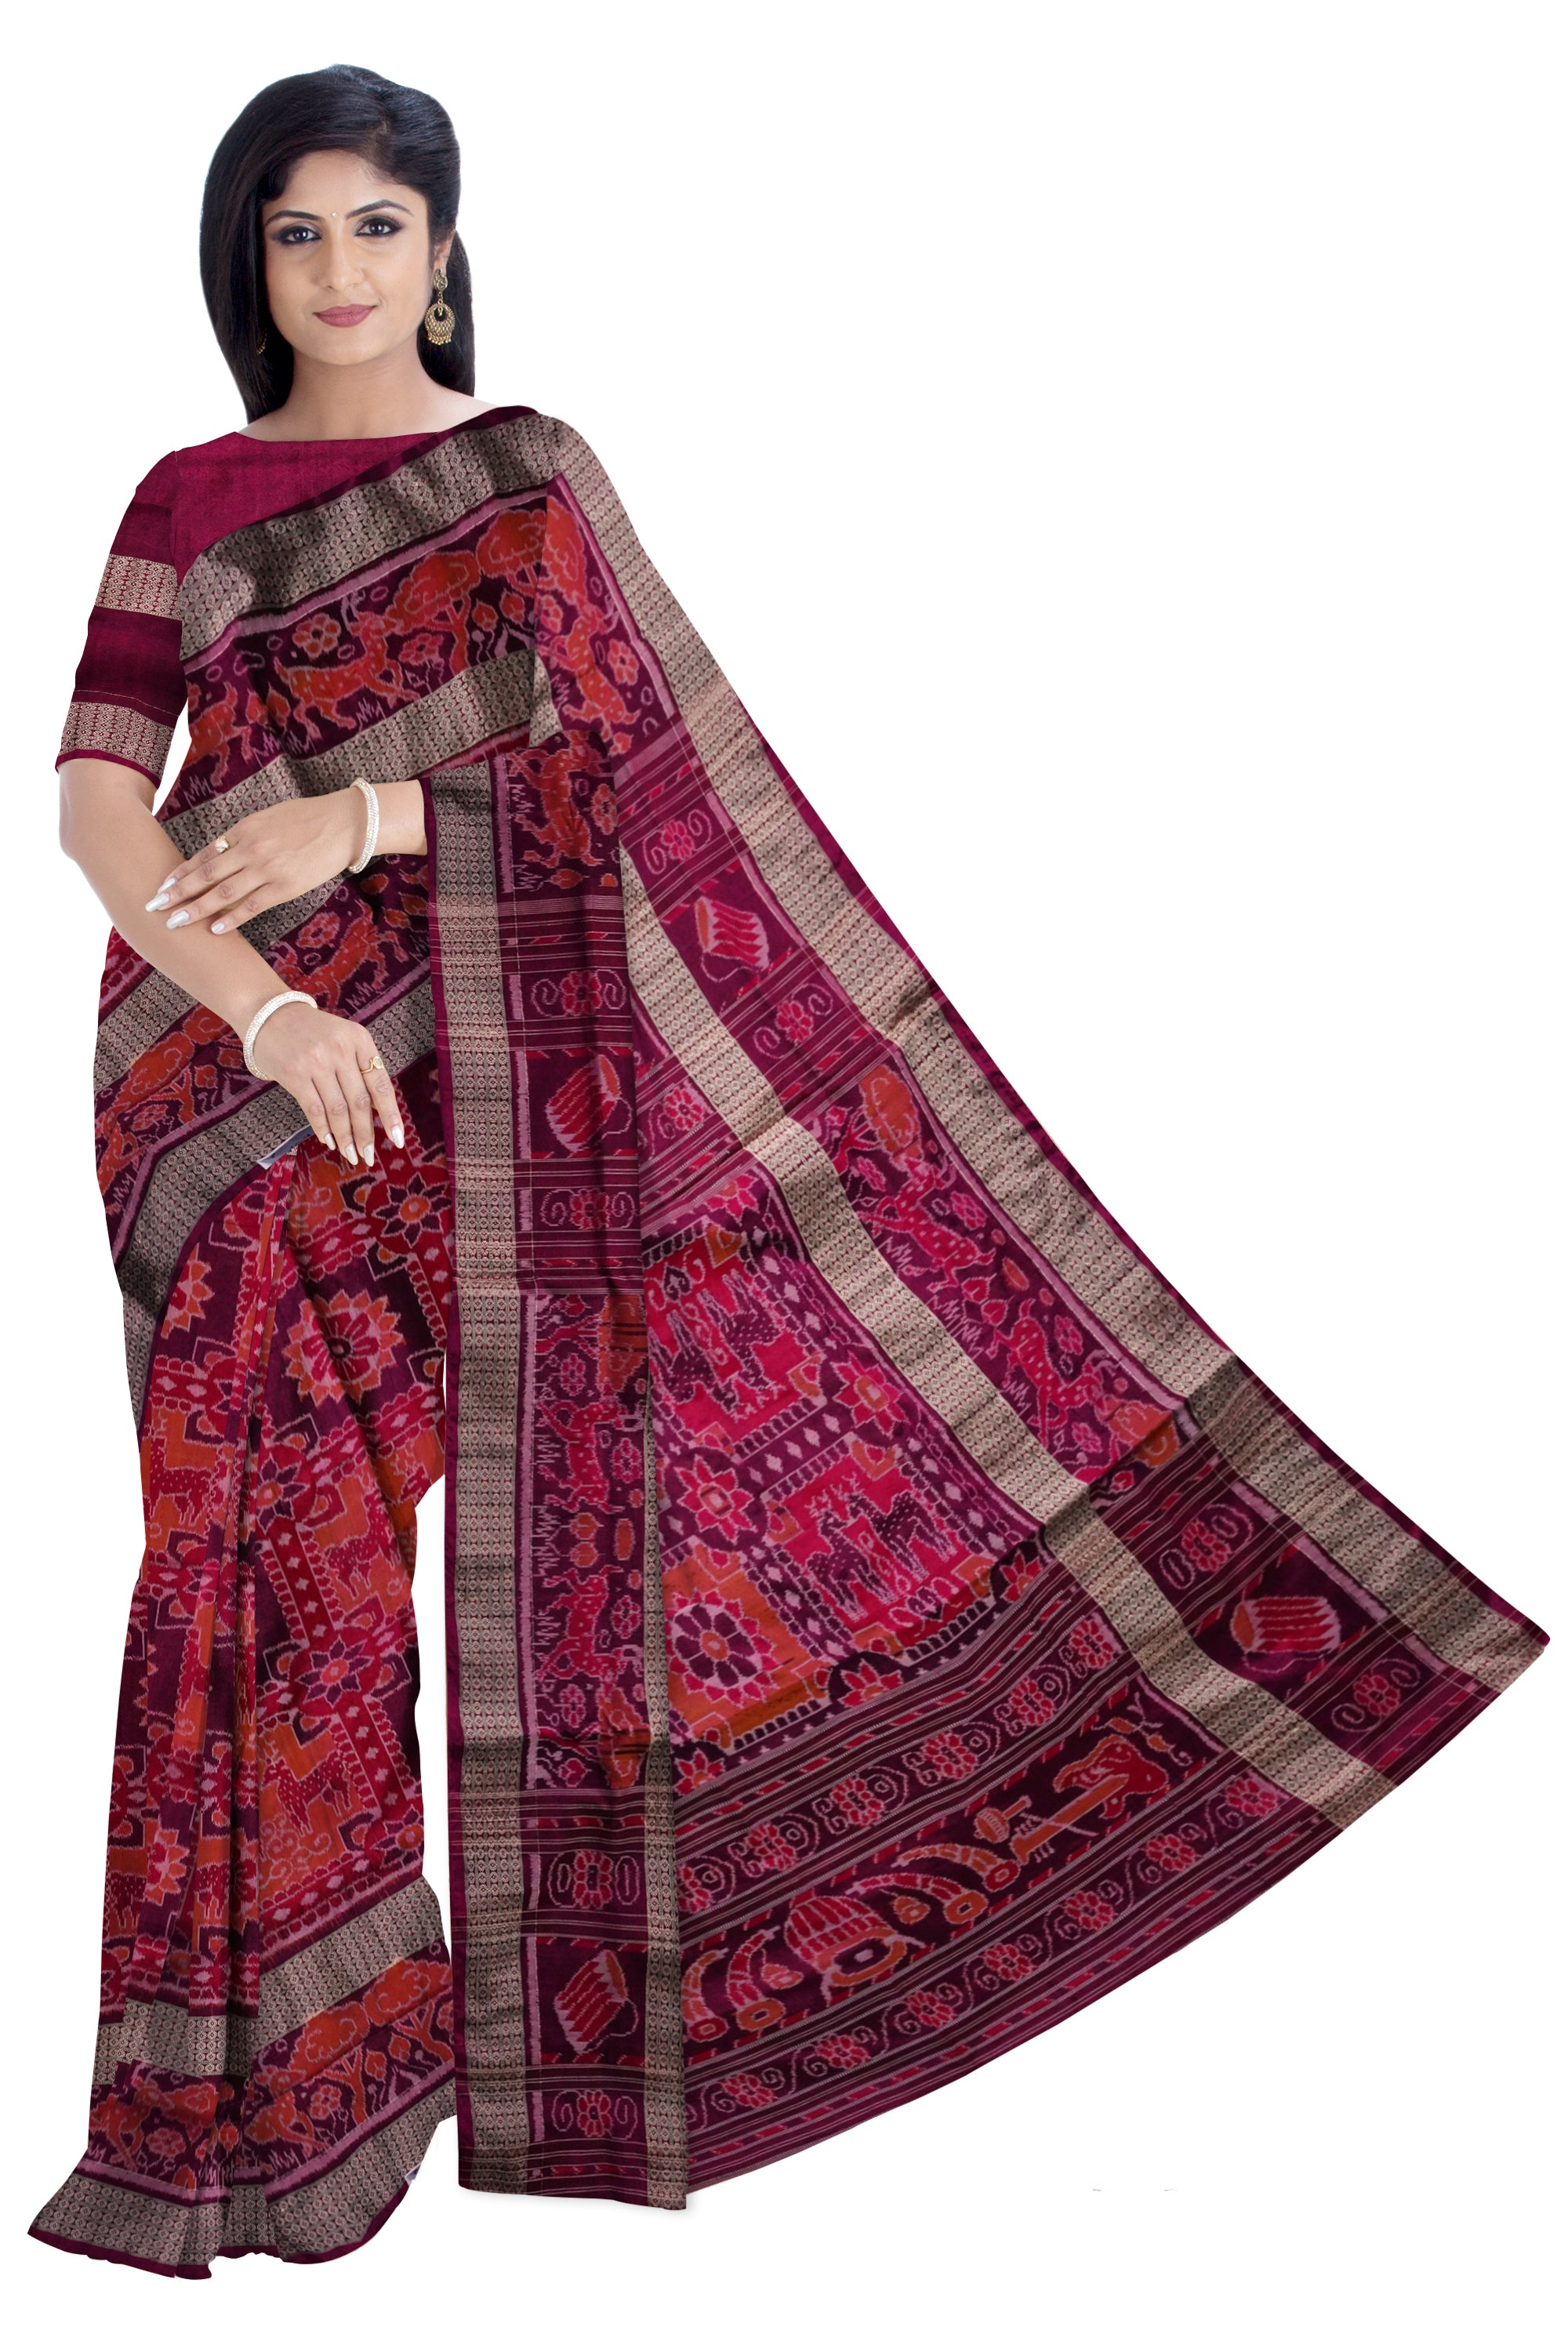 Glory Sarees महिलाओं के लिए बनारसी कॉटन साड़ी, नारंगी : Amazon.in: फैशन